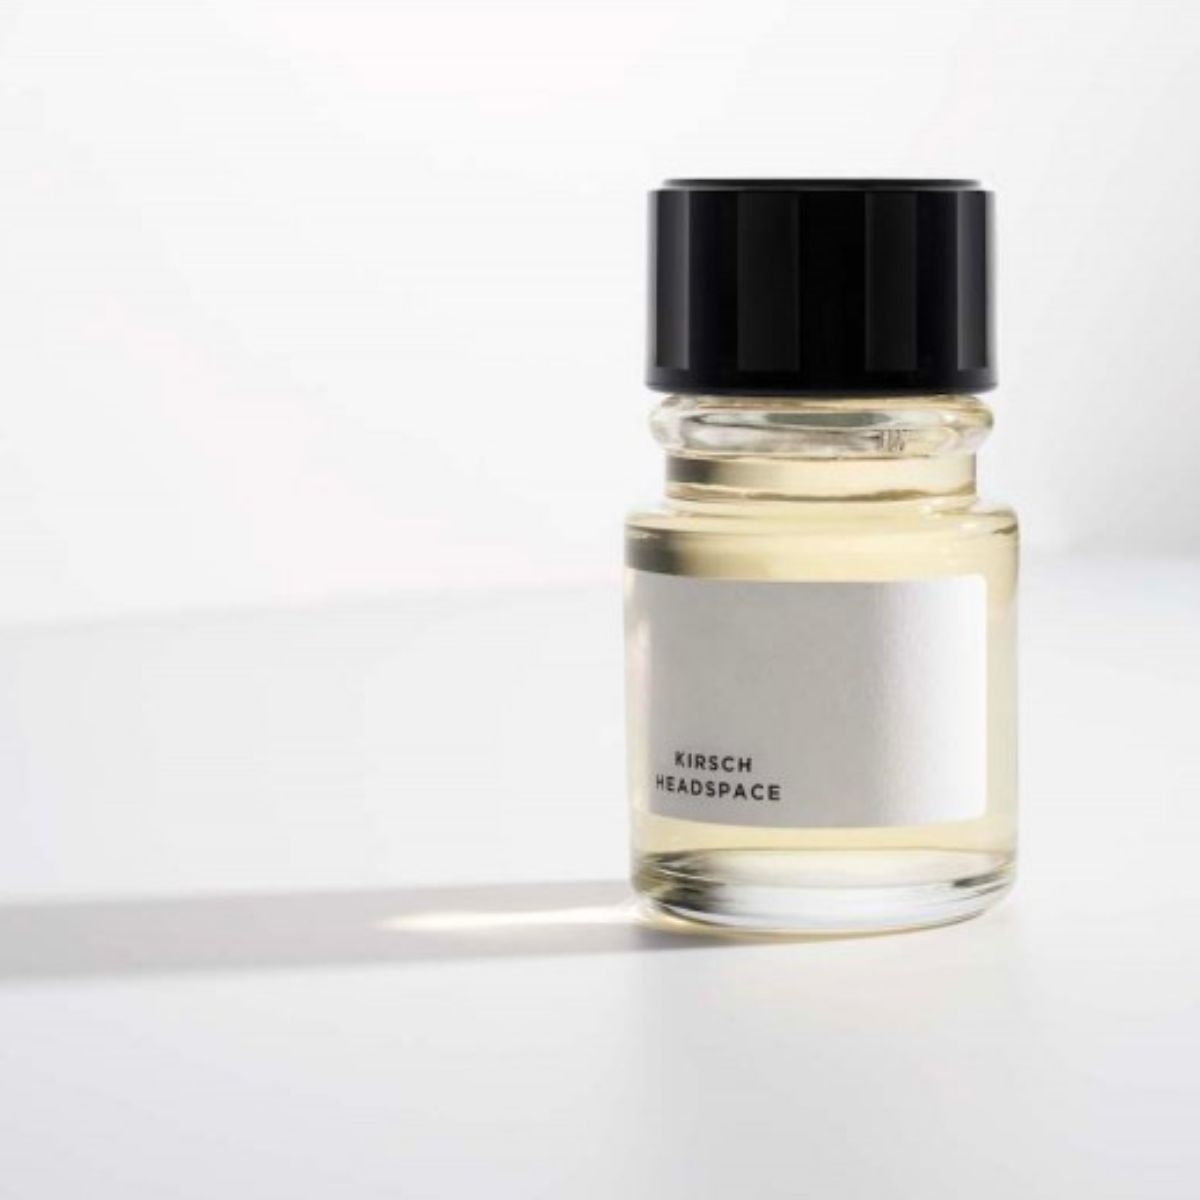 Image of Kirsch eau de parfum by the perfume brand Headspace